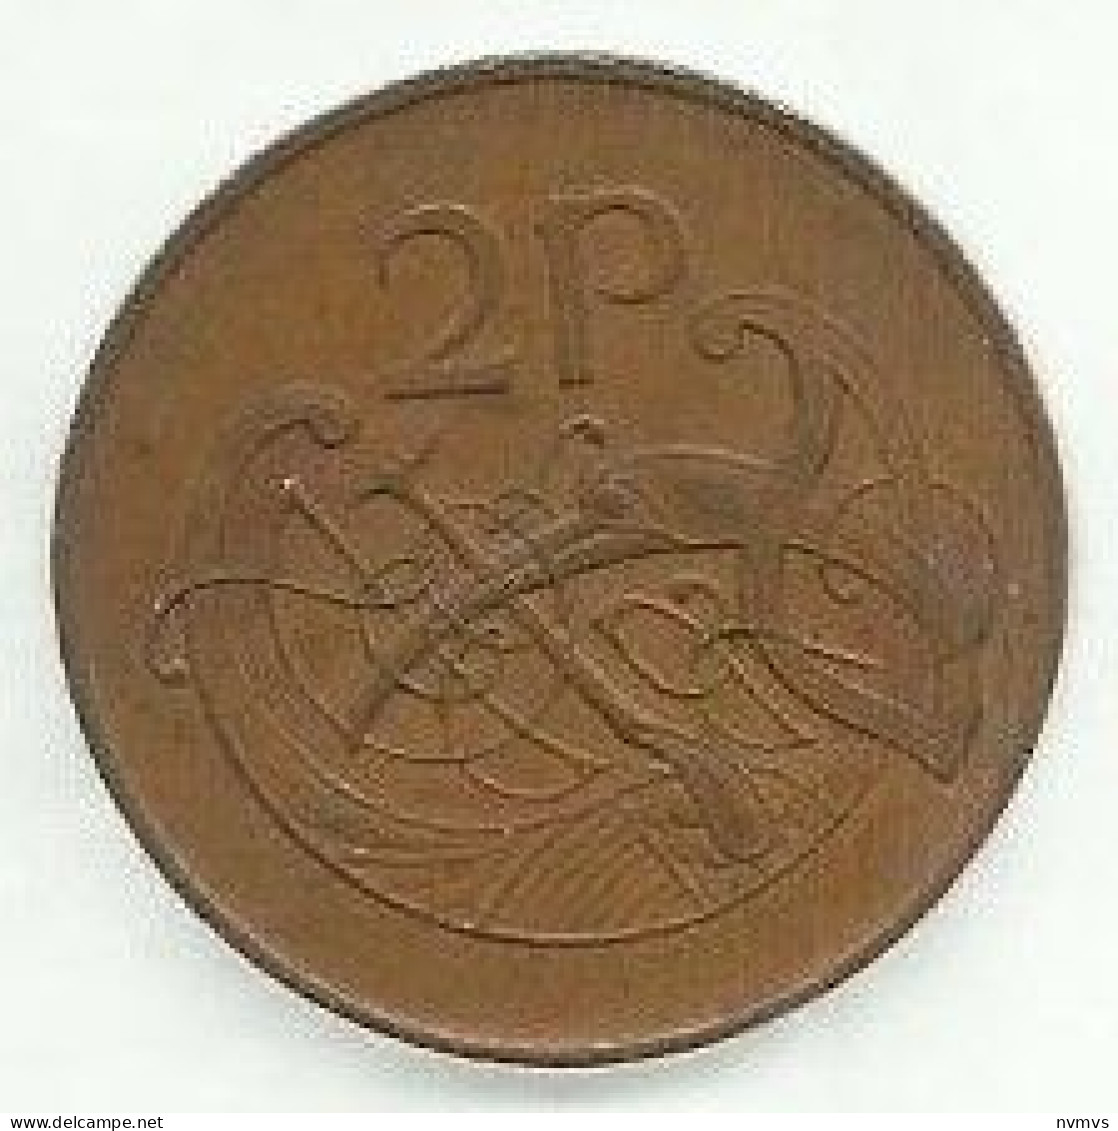 Irlanda - 2 Pence 1971 - Irlande